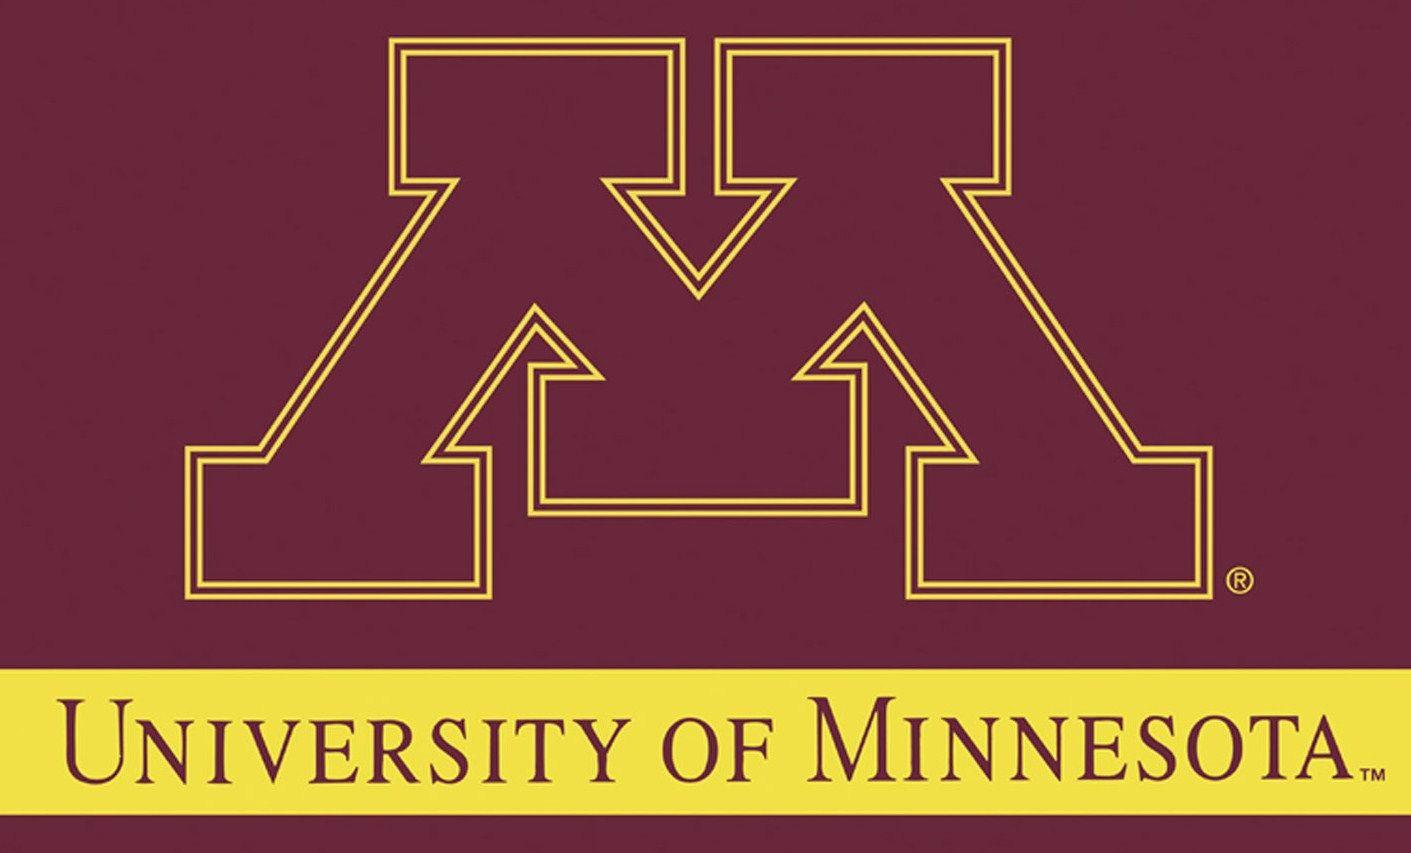 University of Minnesota Logo - The University Of Minnesota Guthrie Theater BFA Actor Training